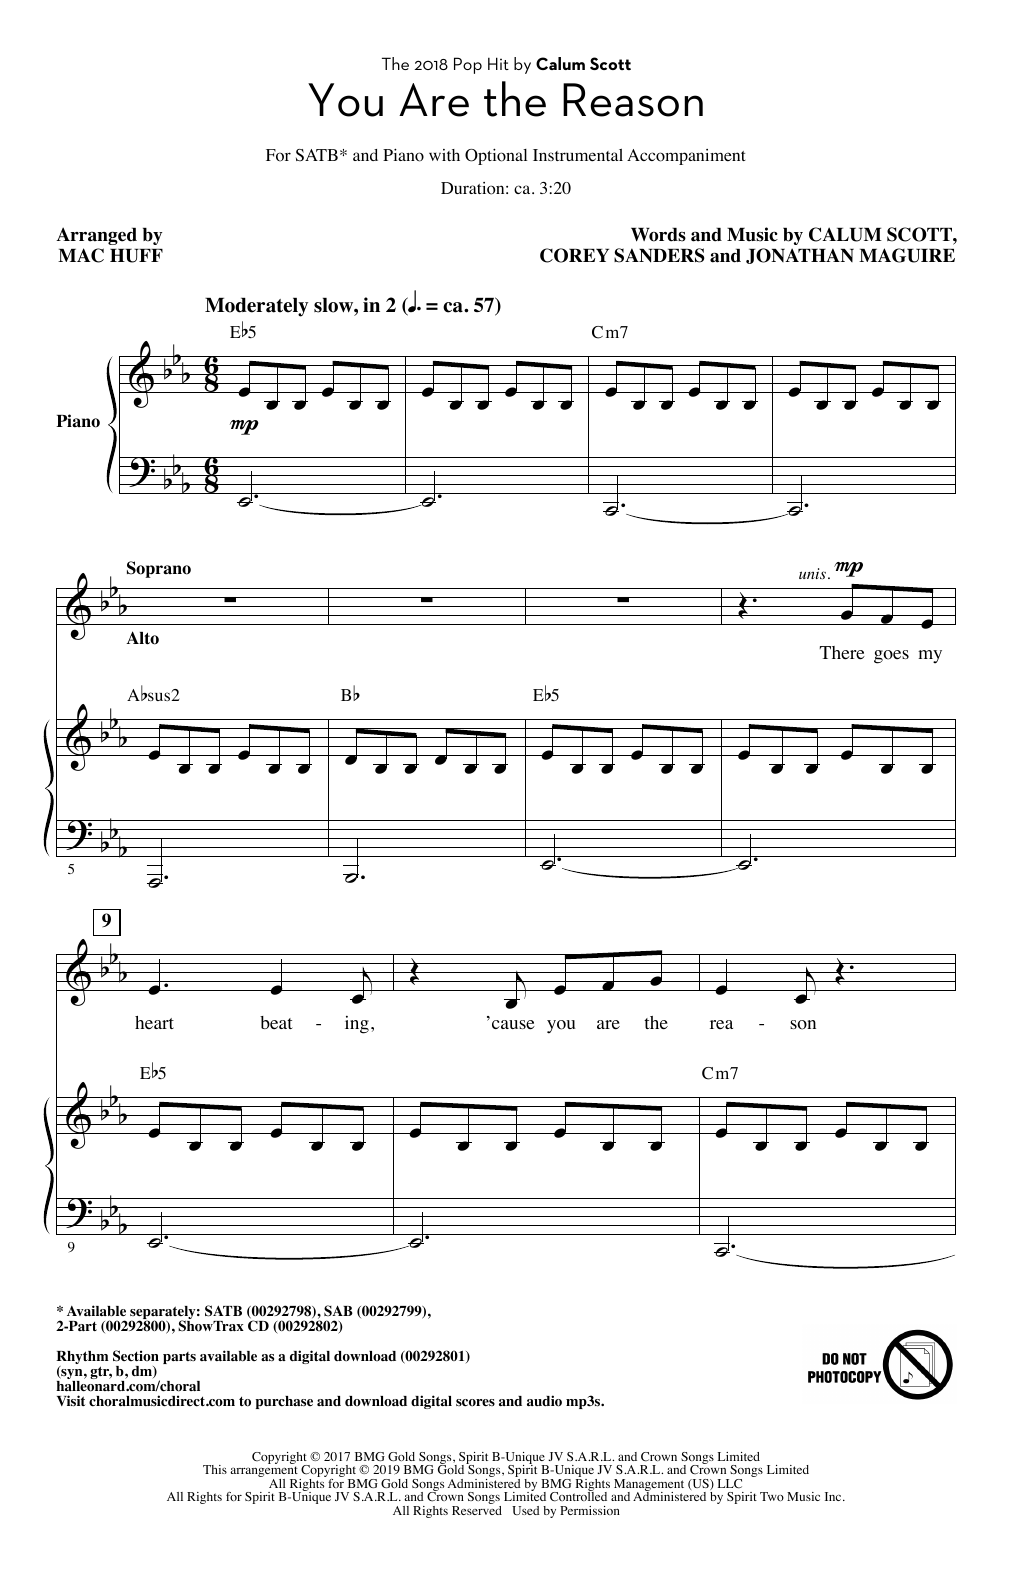 Calum Scott You Are The Reason (arr. Mac Huff) Sheet Music Notes & Chords for SAB Choir - Download or Print PDF